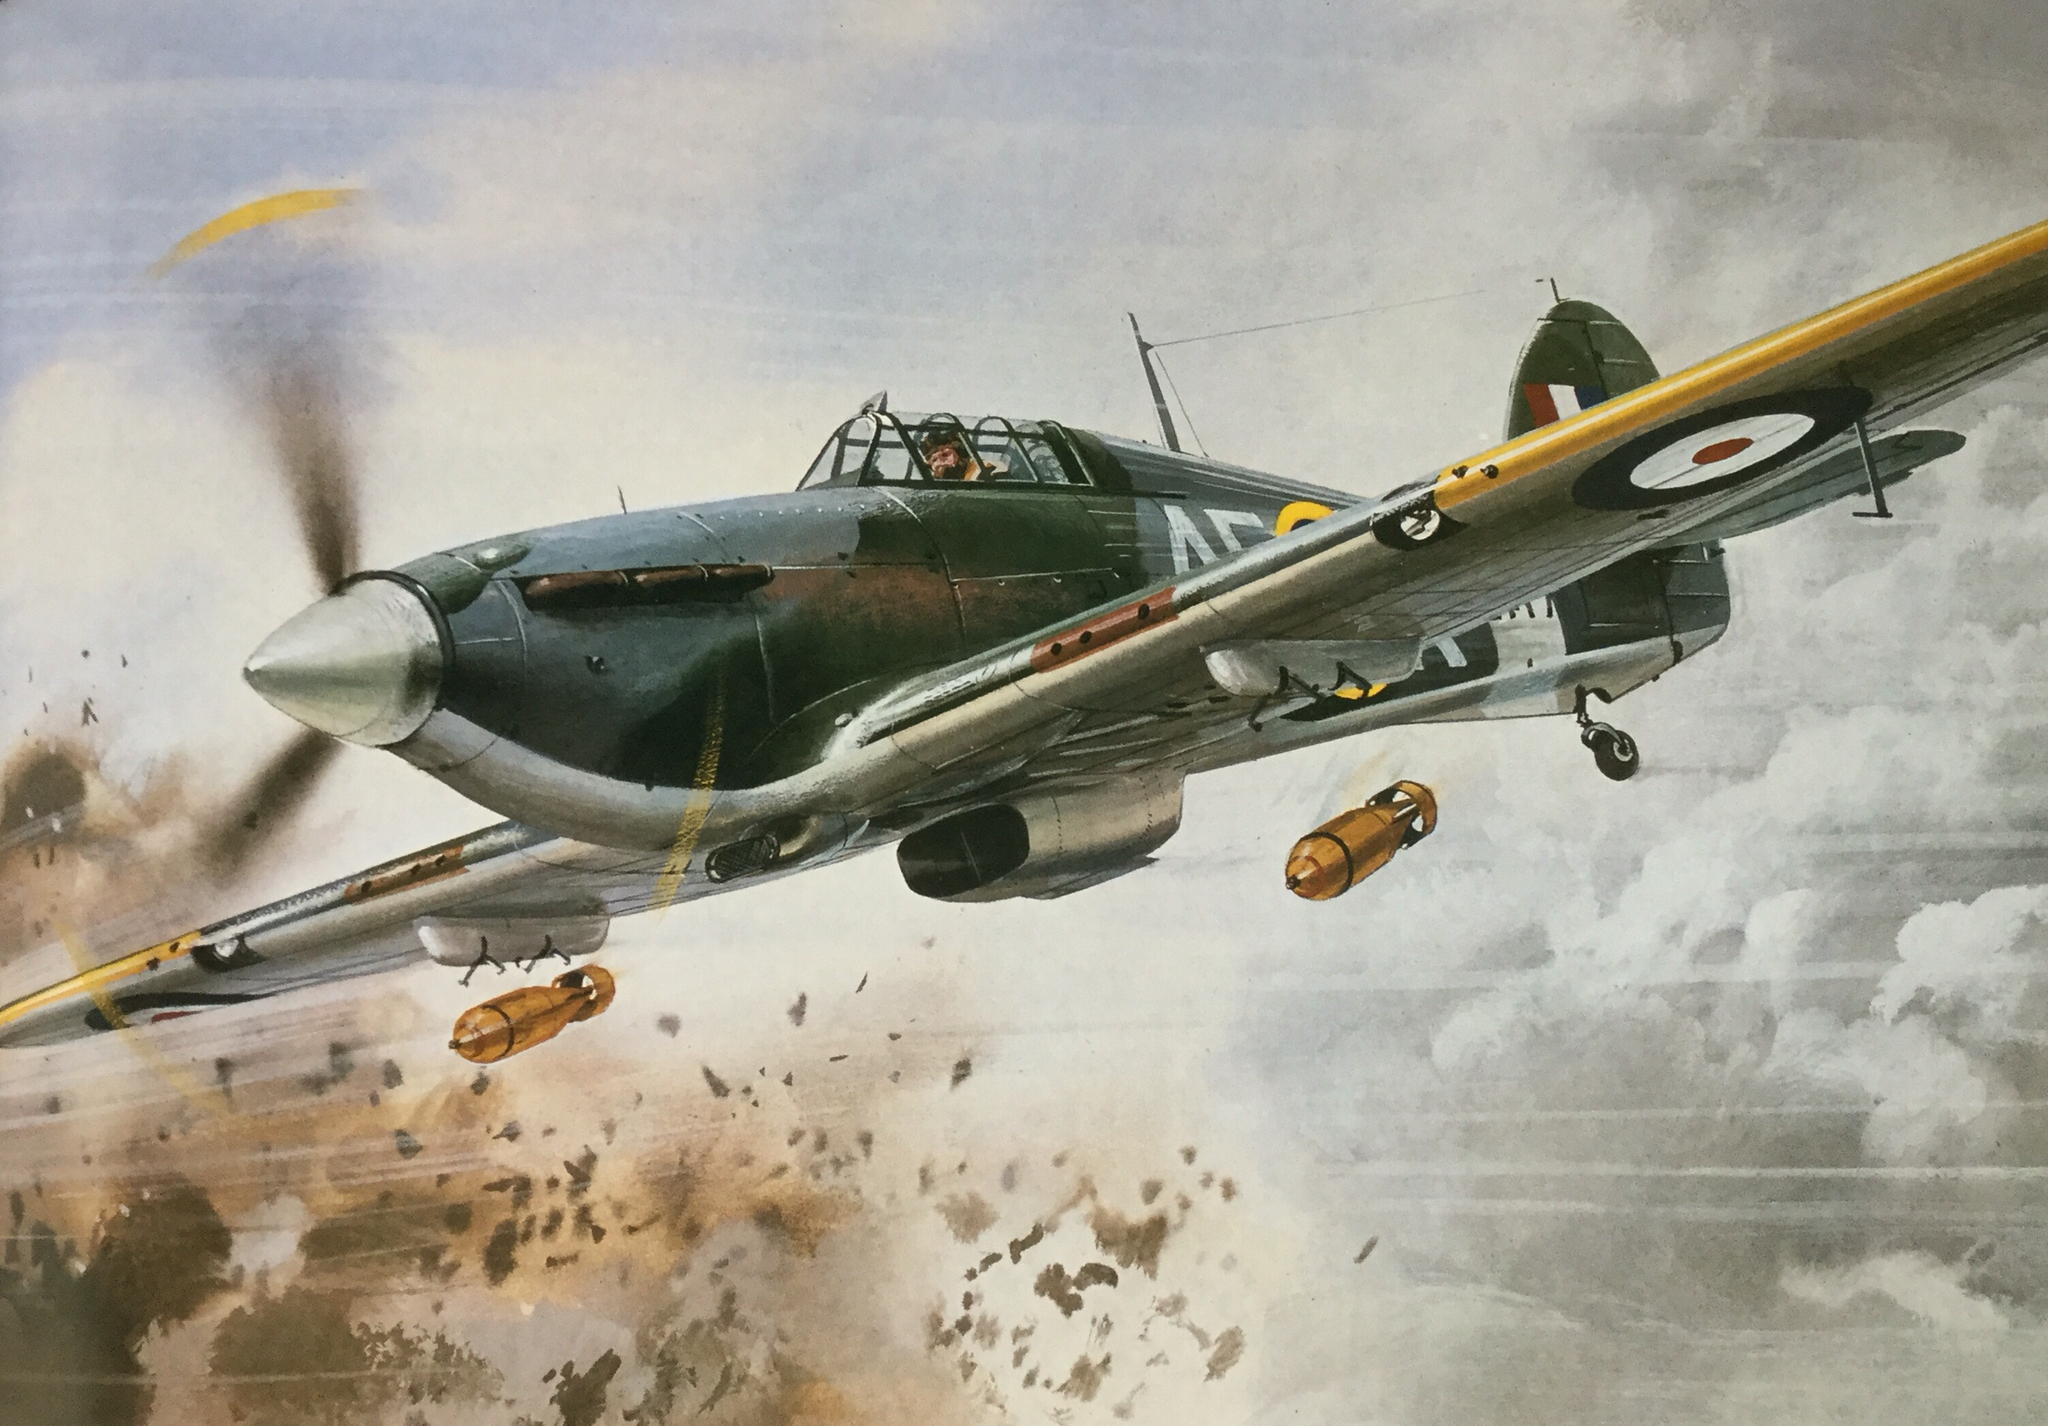 A high-definition desktop wallpaper featuring a Hawker Hurricane military aircraft in flight.